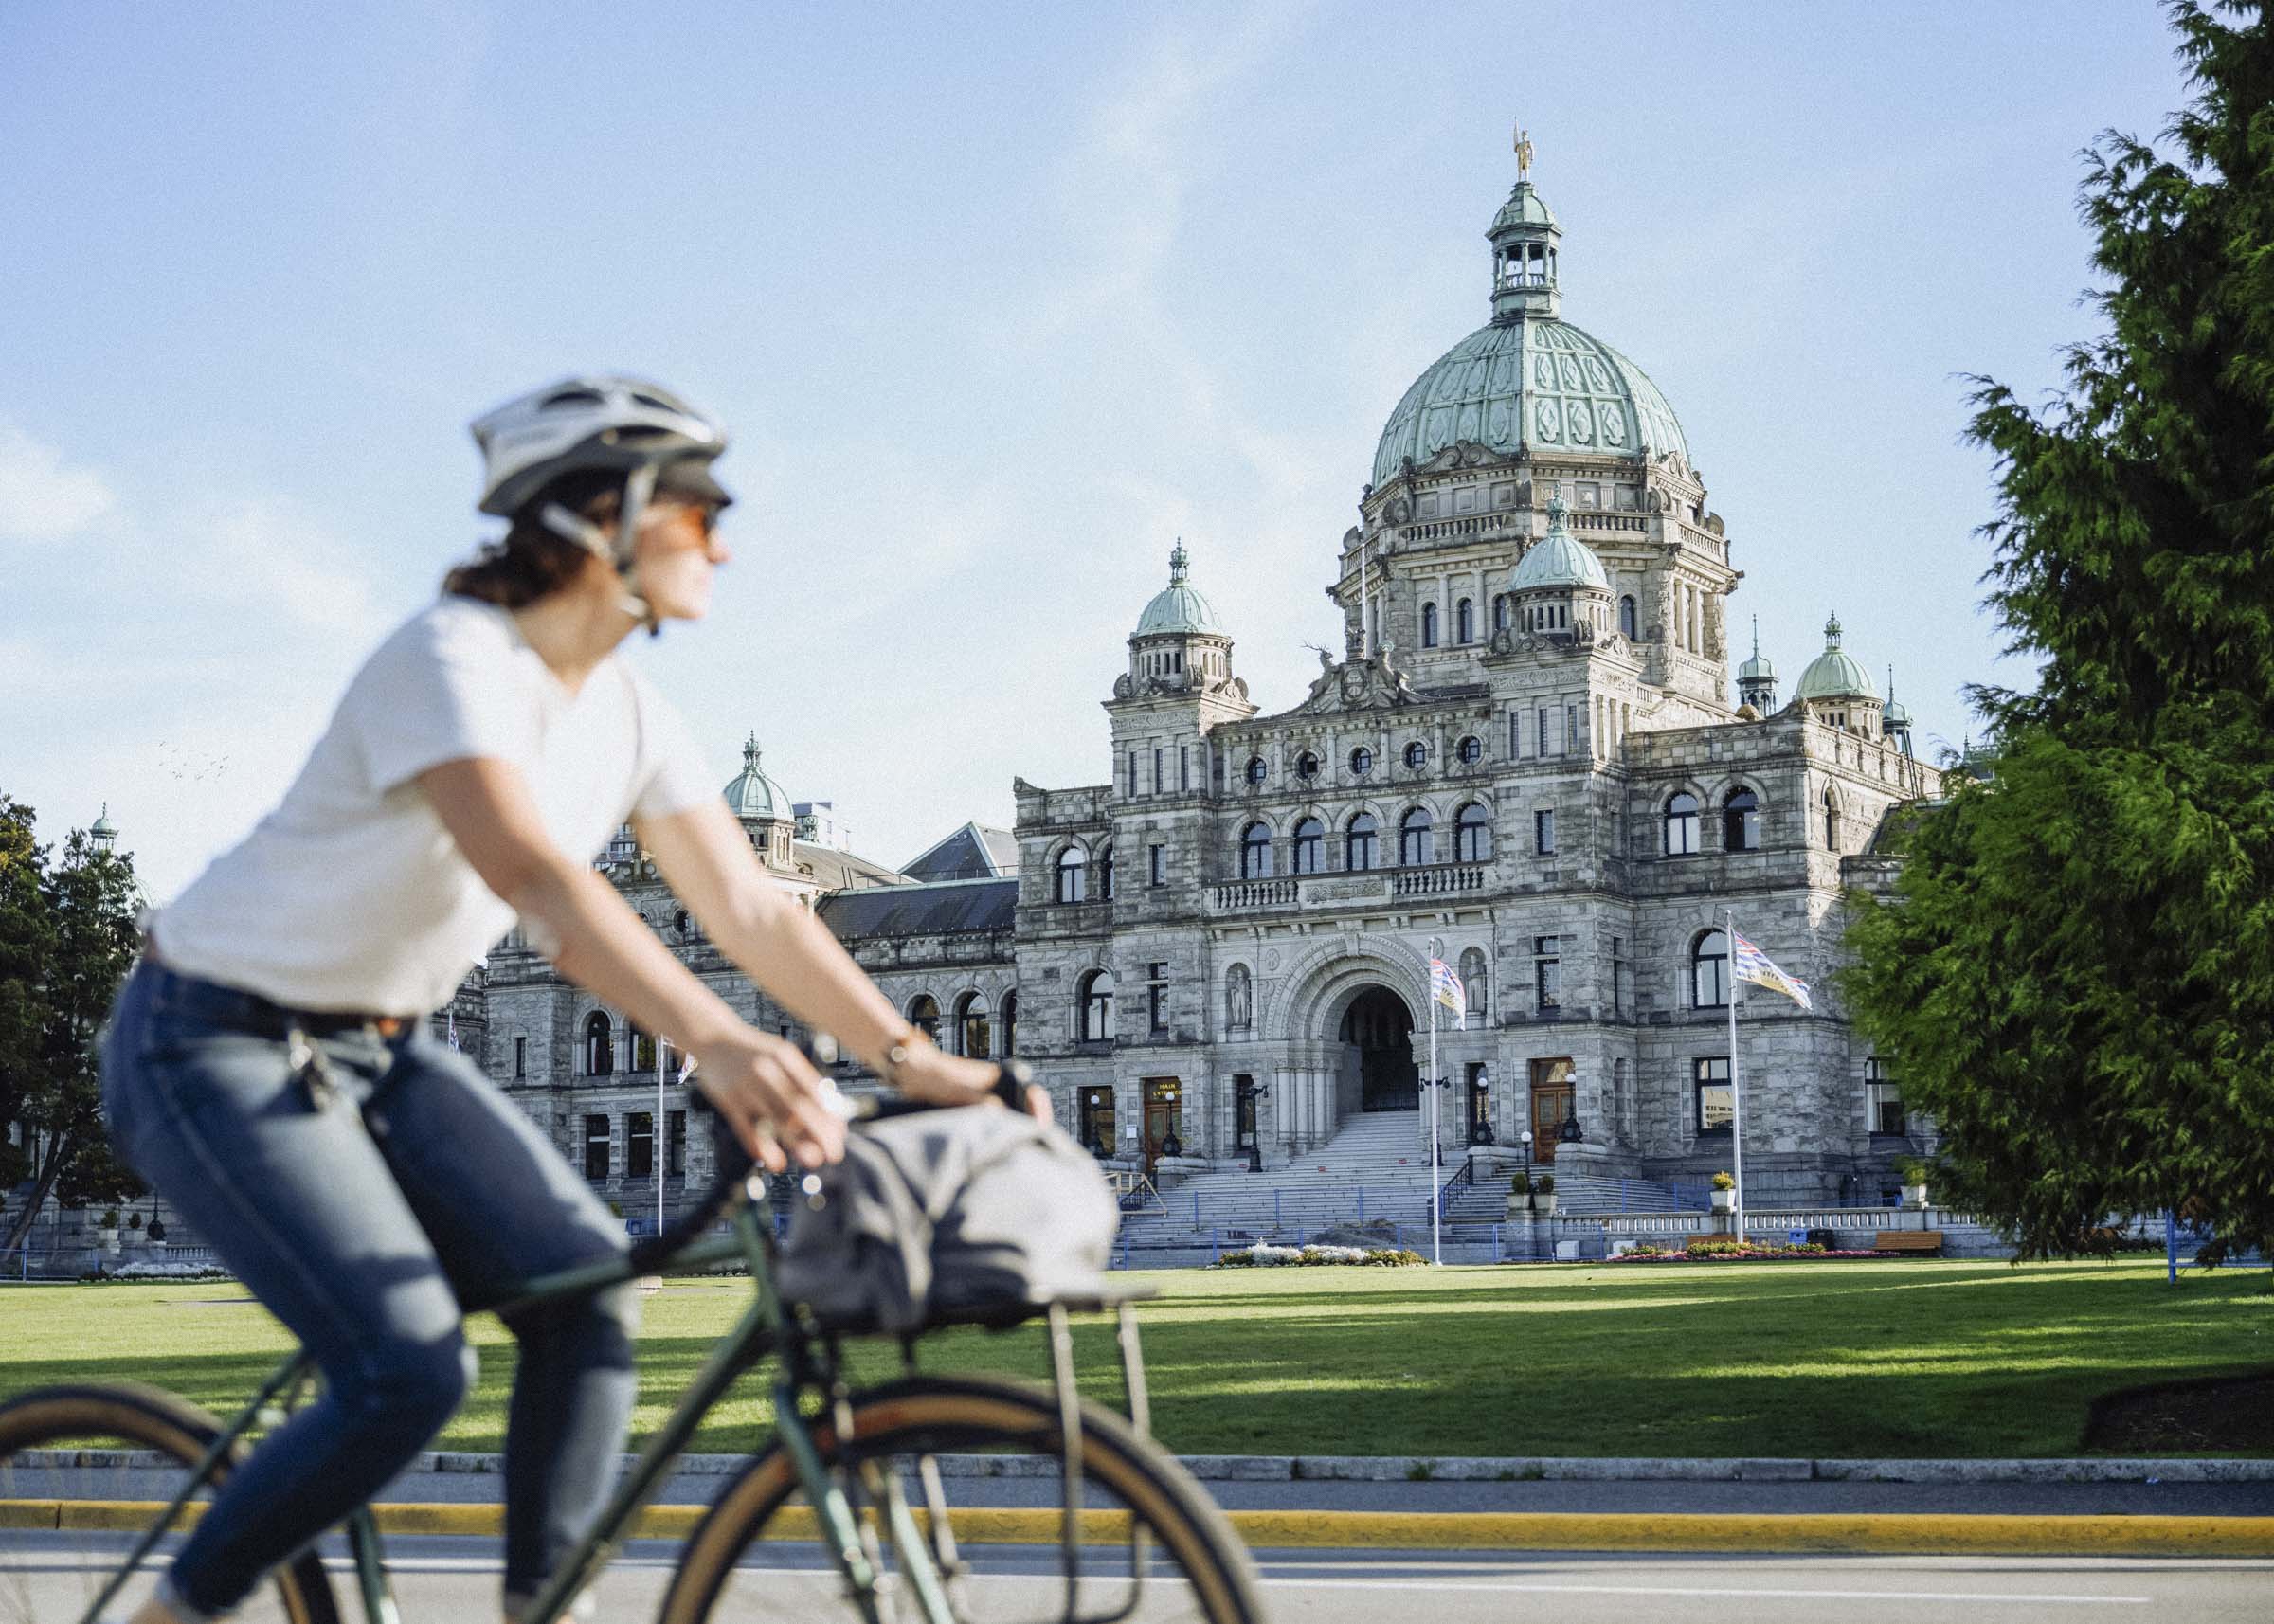 Biking around the city in Victoria, BC